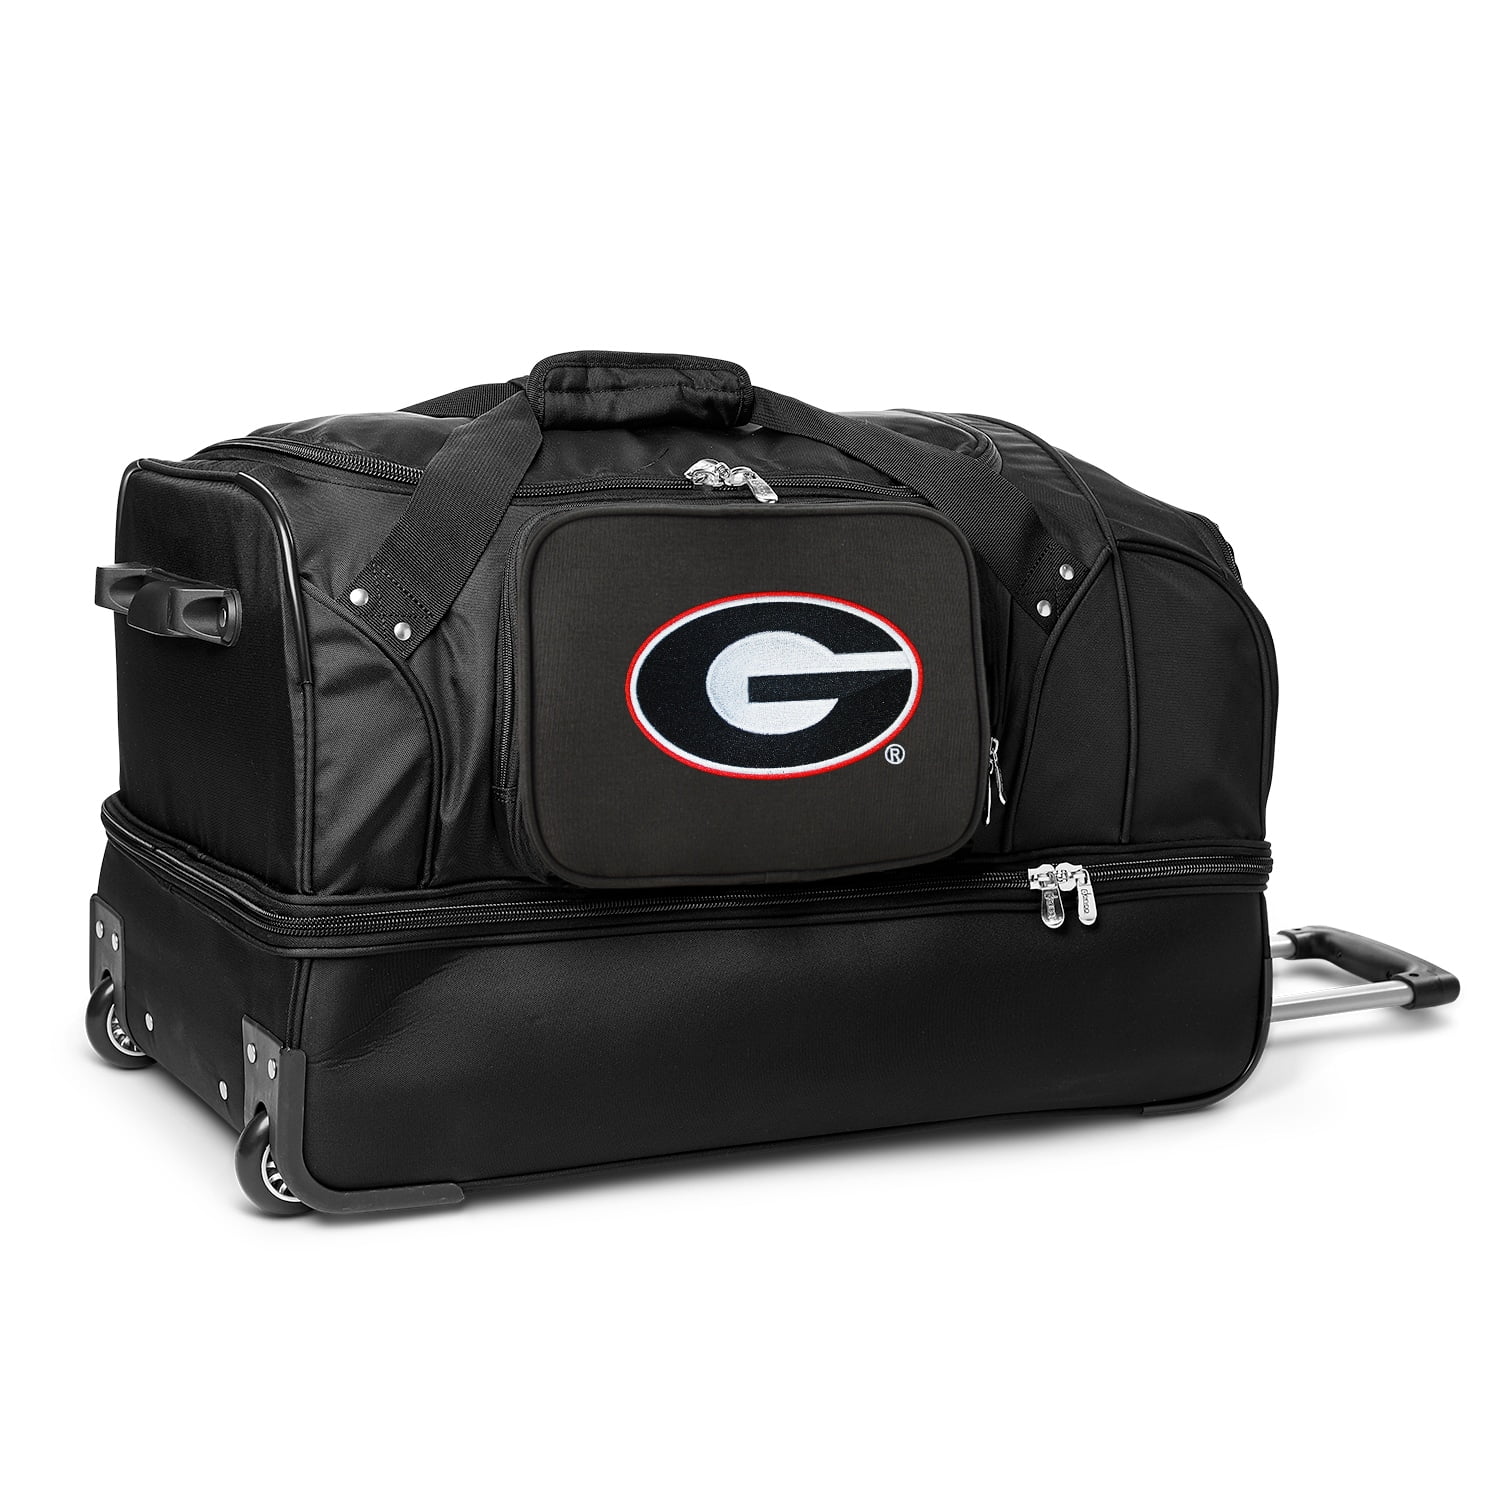 Deluxe University of Georgia Suitcase Duffel Bag or Large Georgia Bulldogs Gym Bag Gear Duffle 